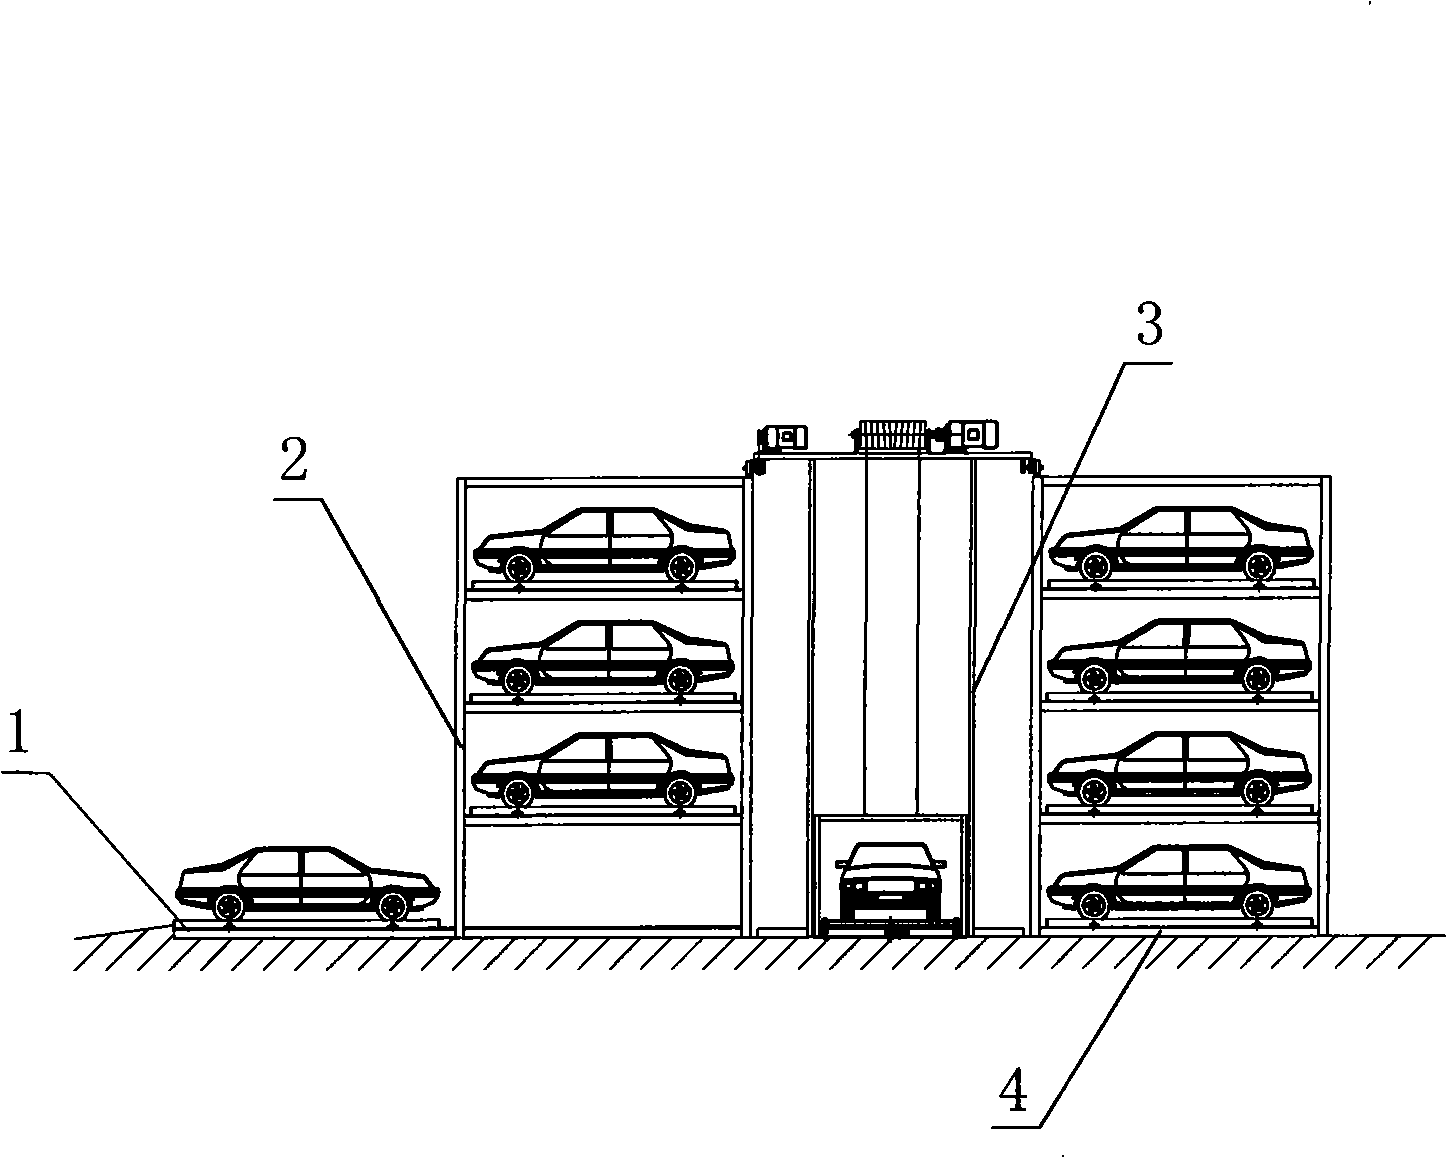 Annular array type stereo garage